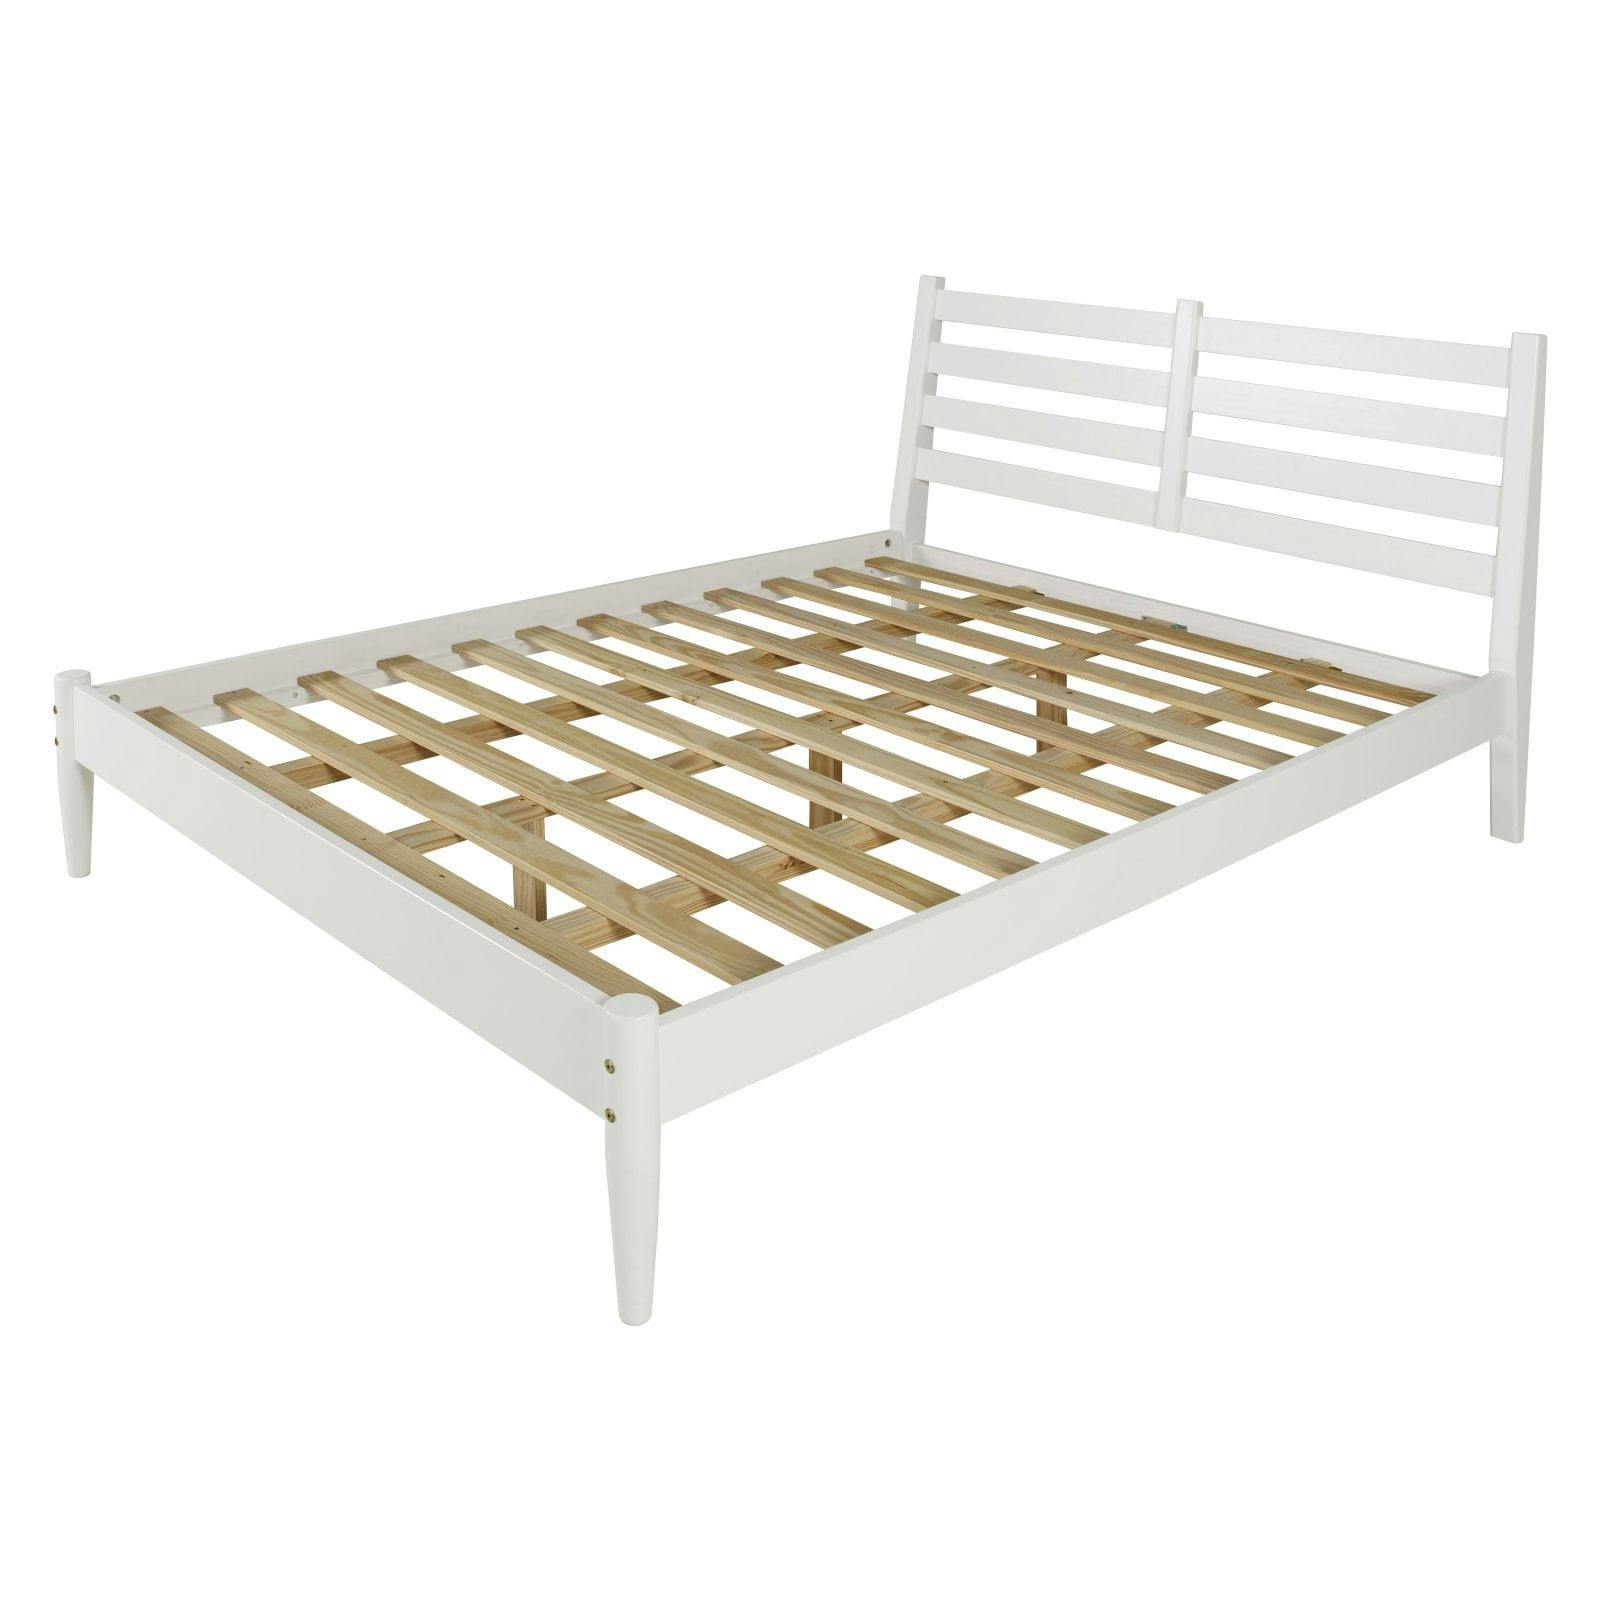 Elegant Pine Wood King-Size Bed with Slatted Headboard - White Finish